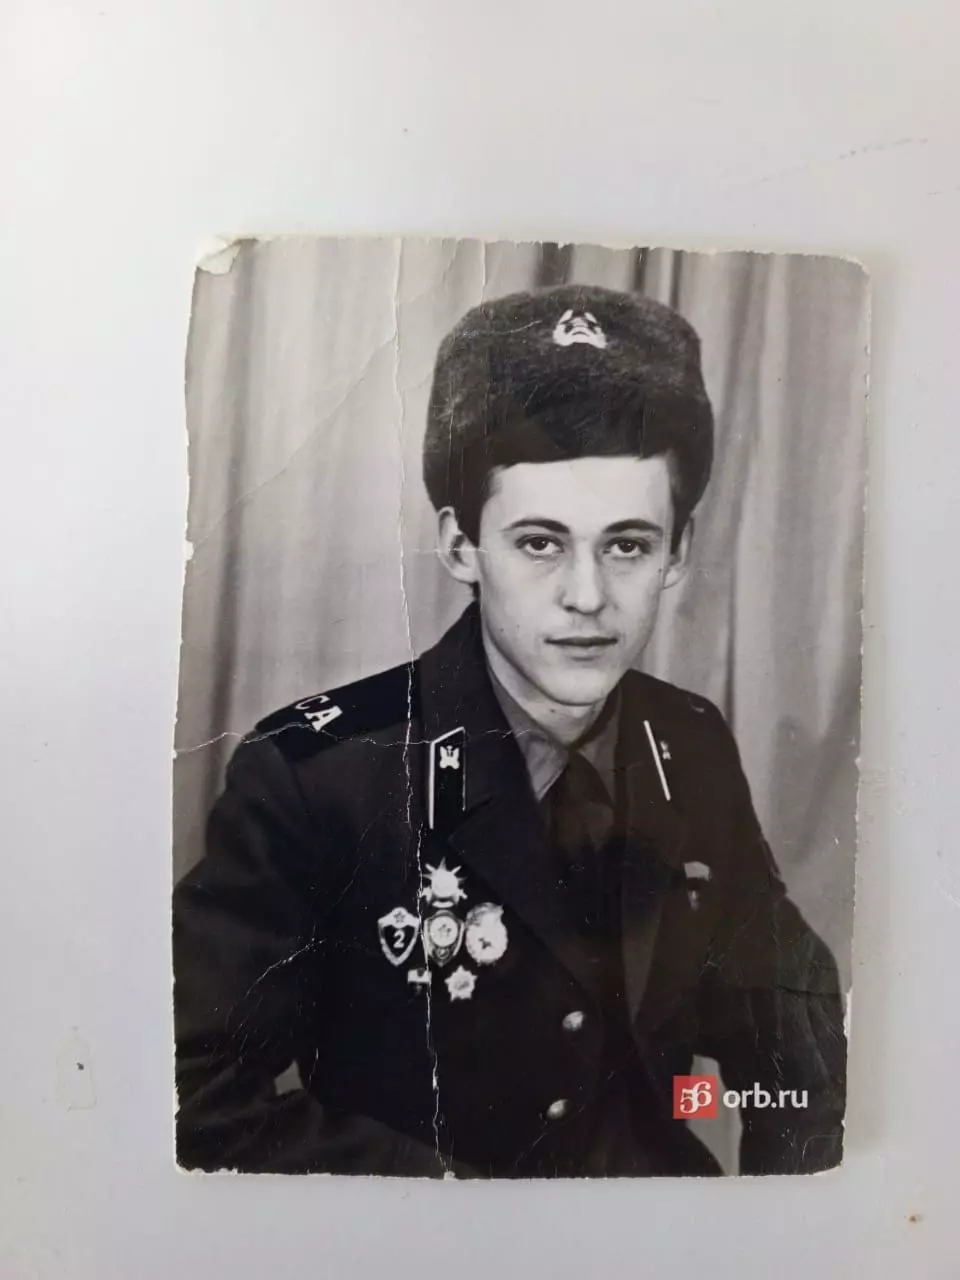 Мужчина, служивший в СССР